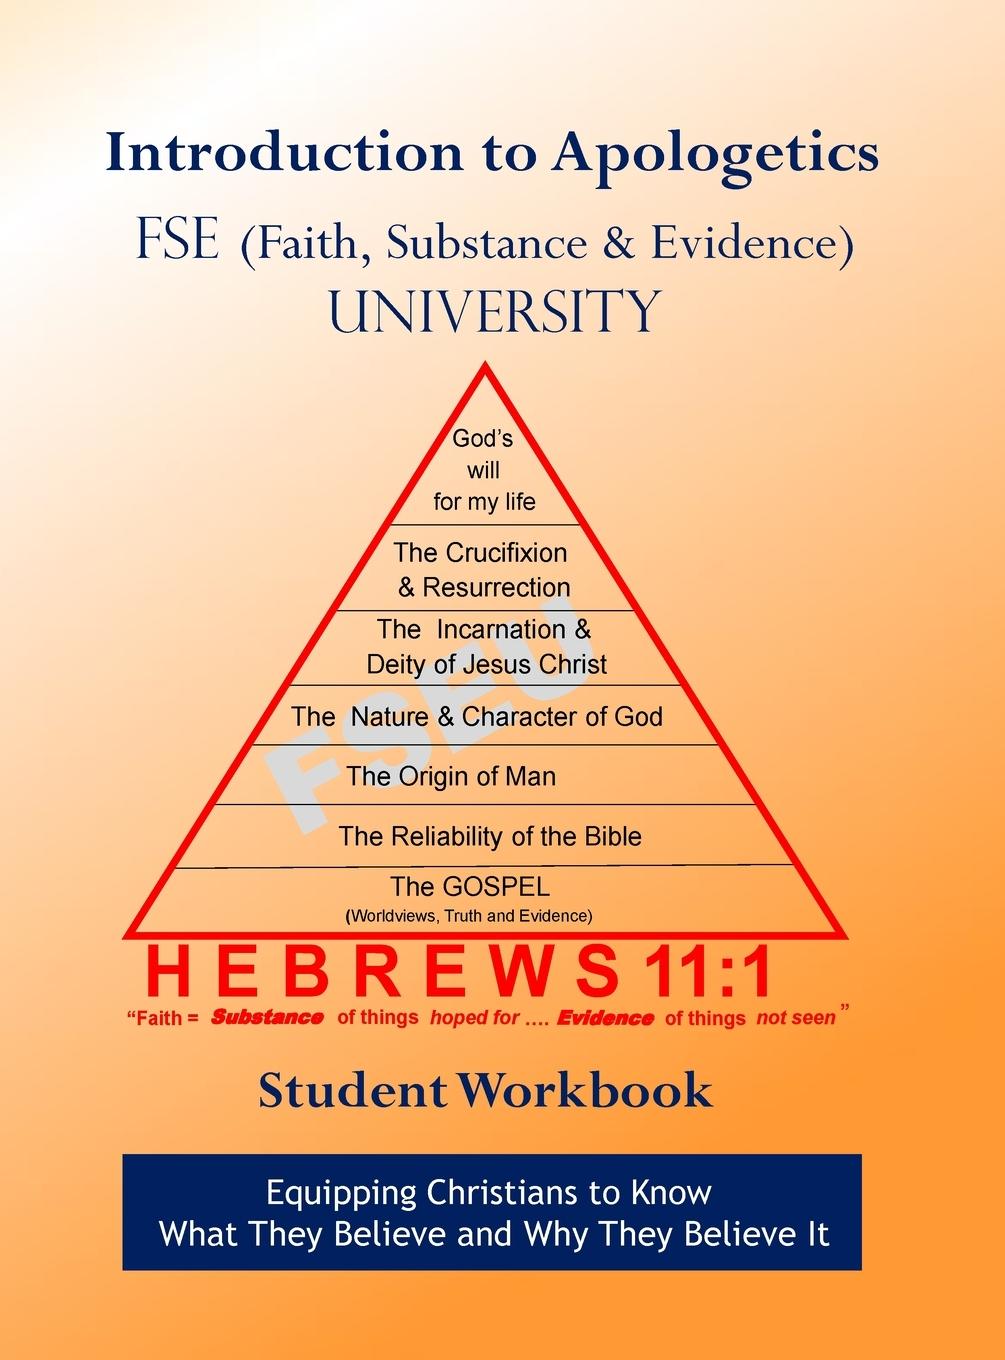 Kniha FSE University Introduction to Apologetics Student Workbook 